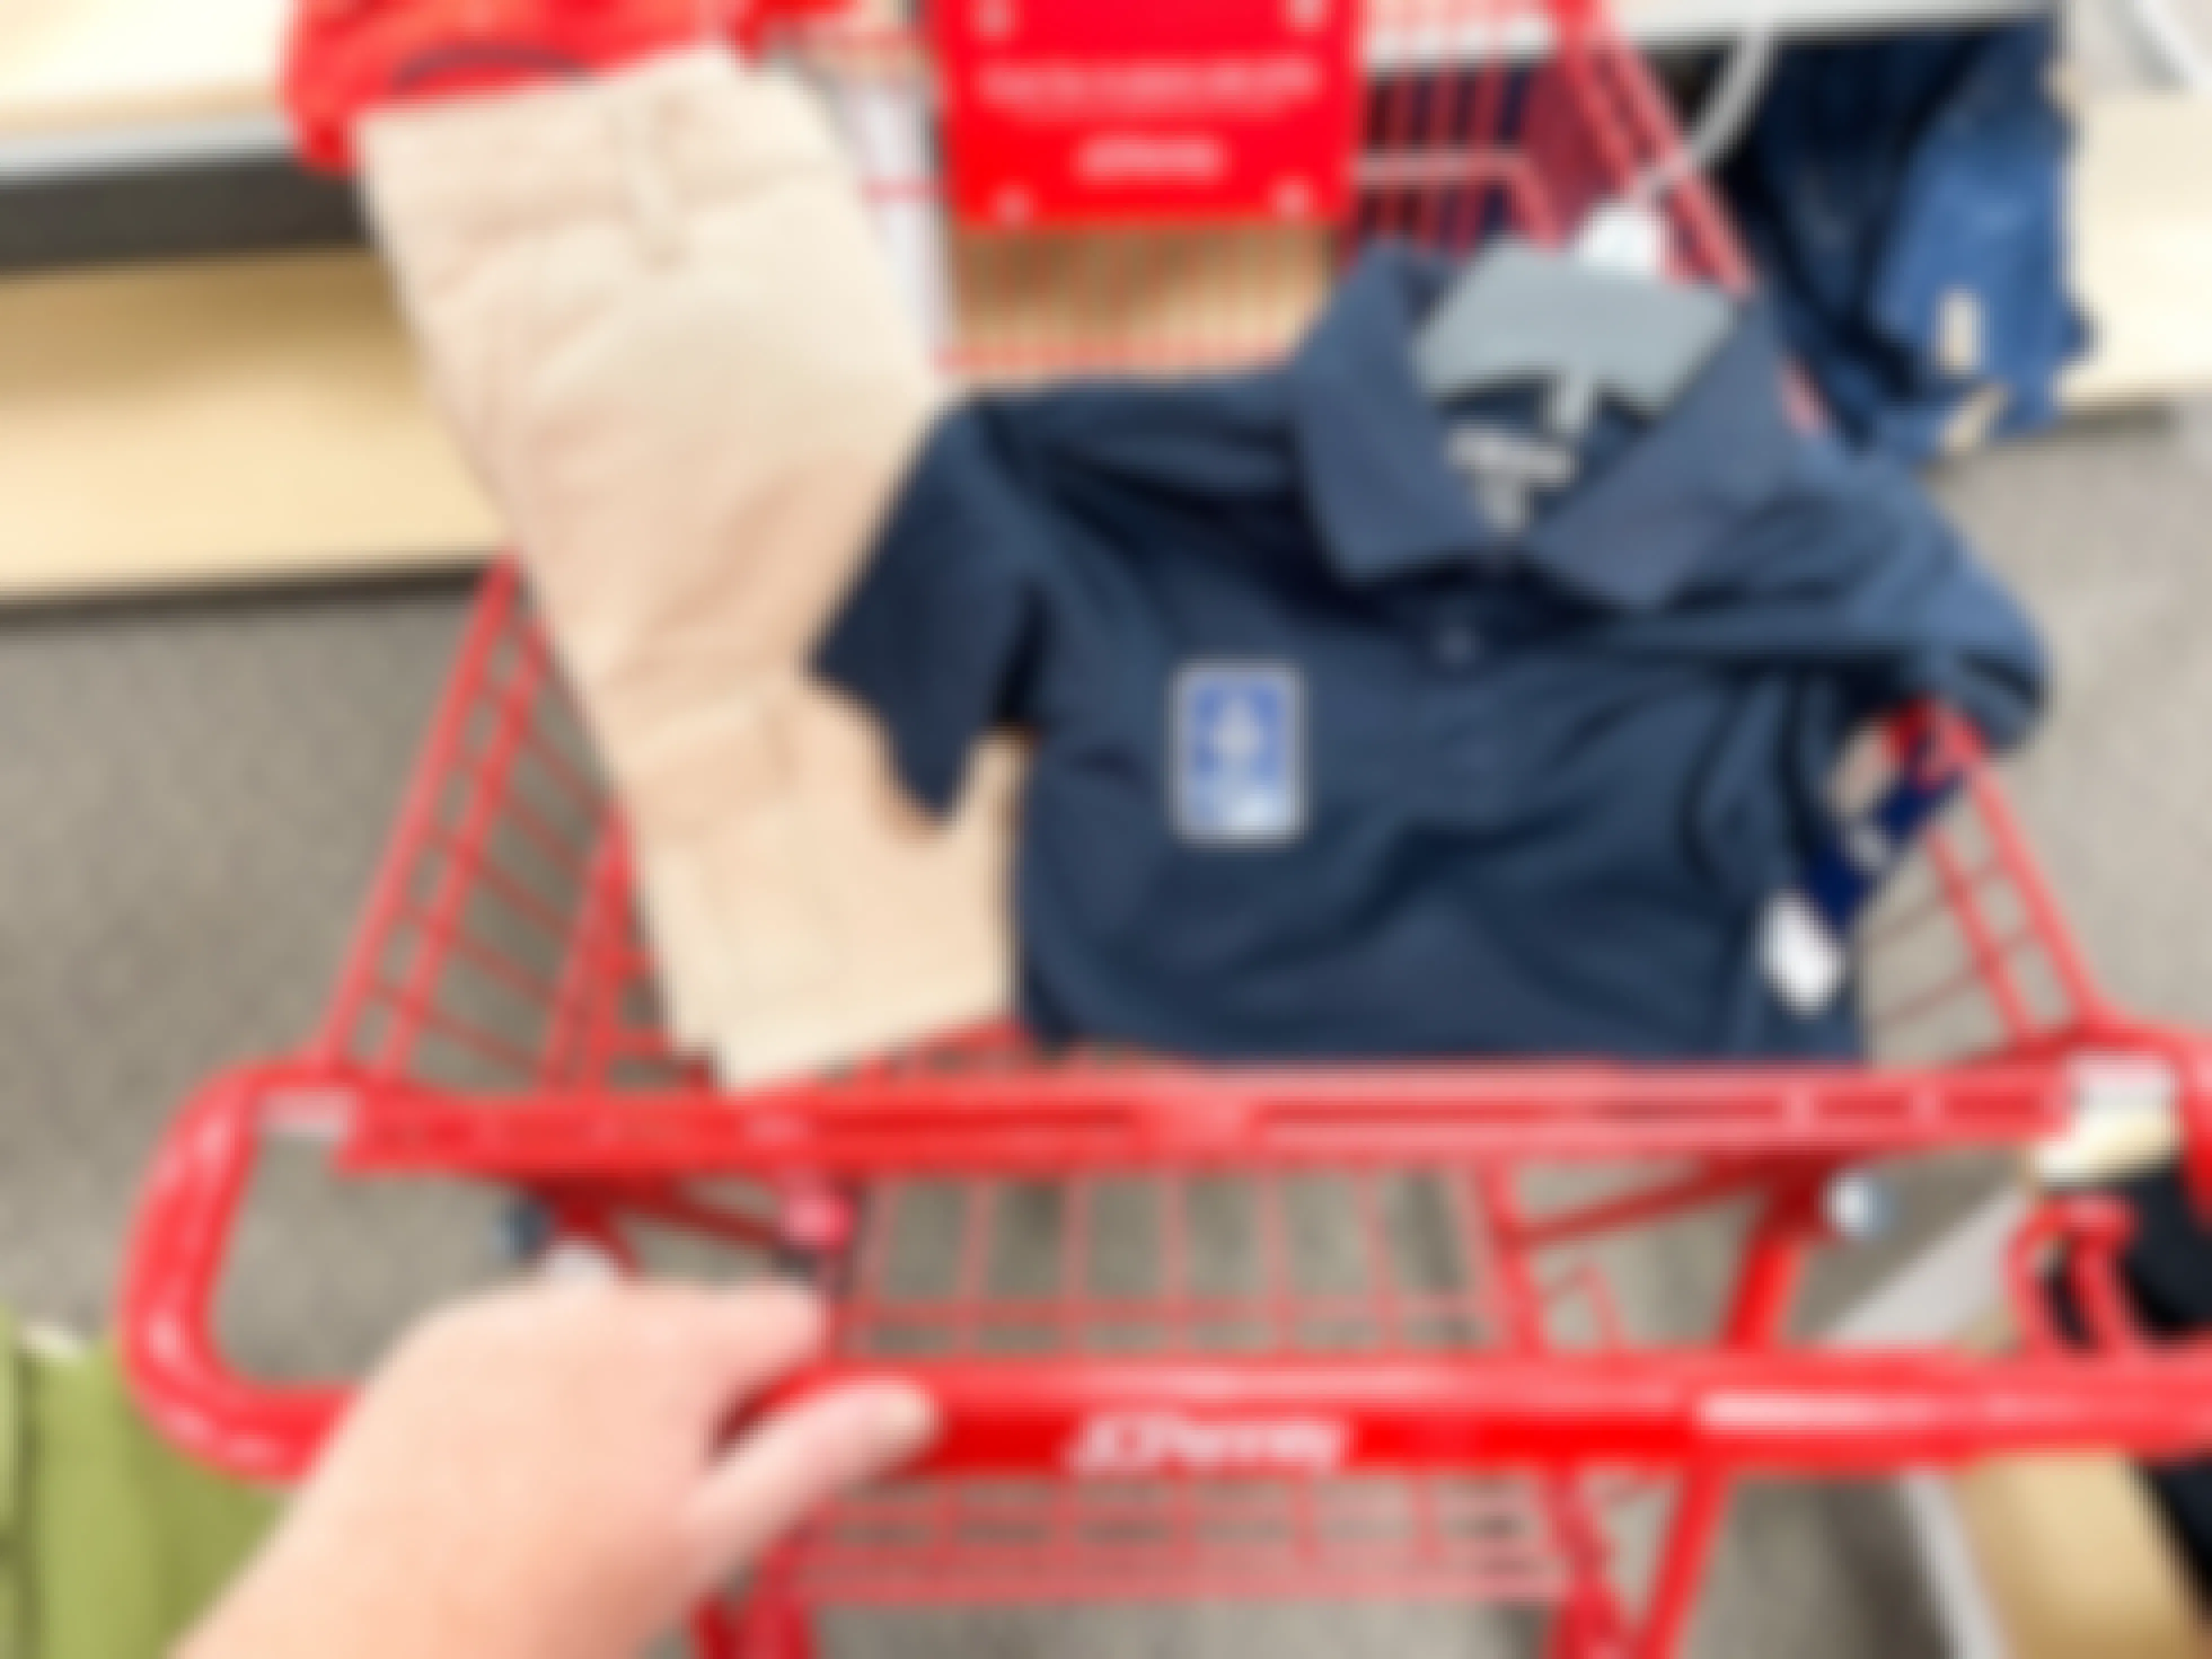 school uniform clothes in a shopping cart